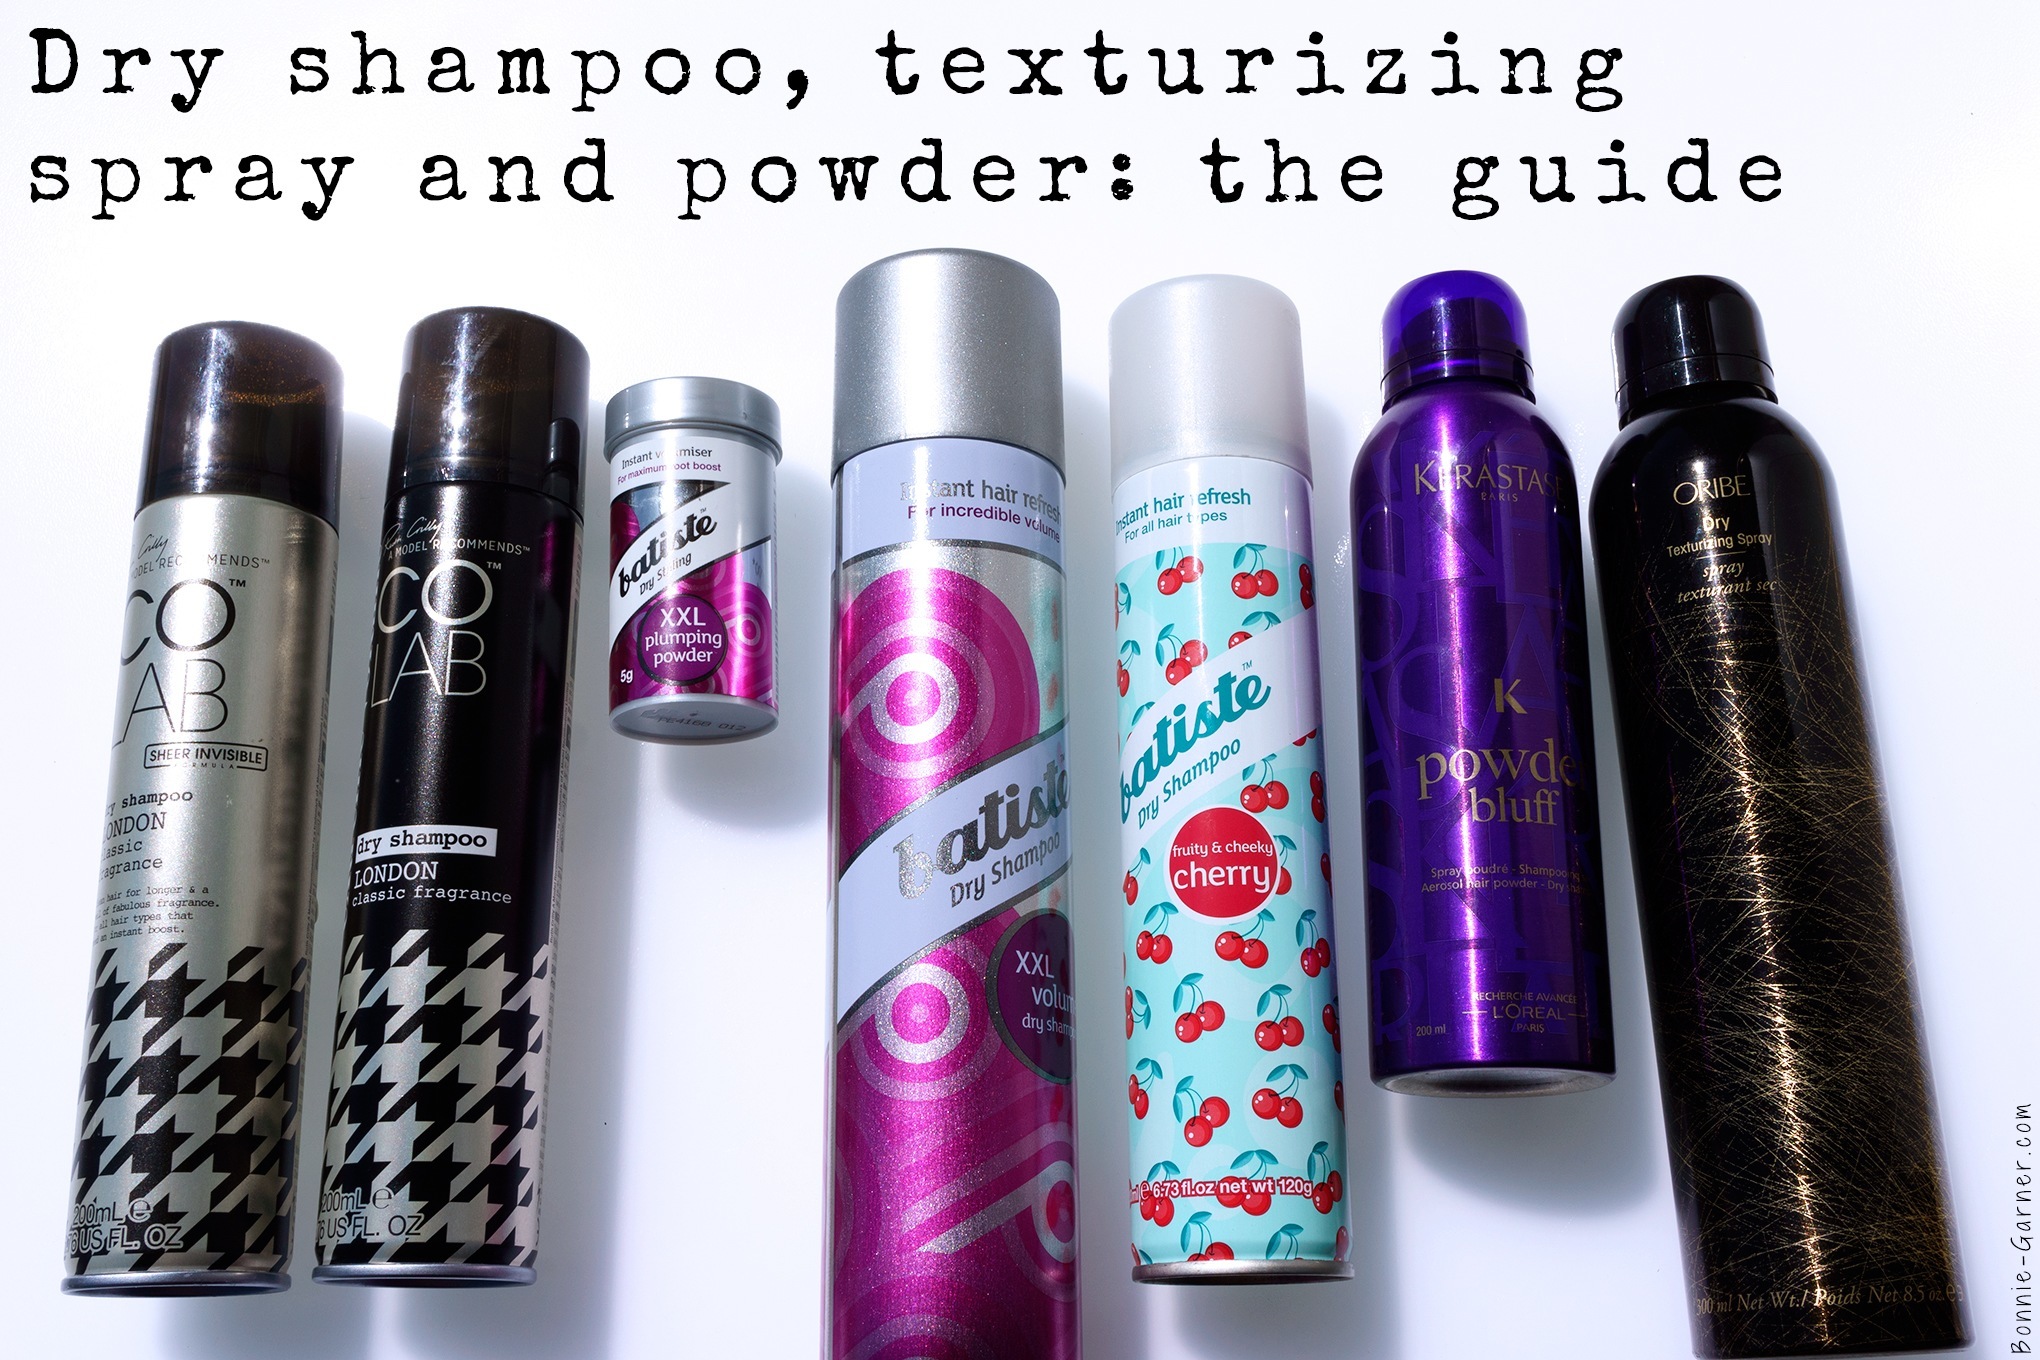 Dry shampoo, texturizing spray and powder: the guide